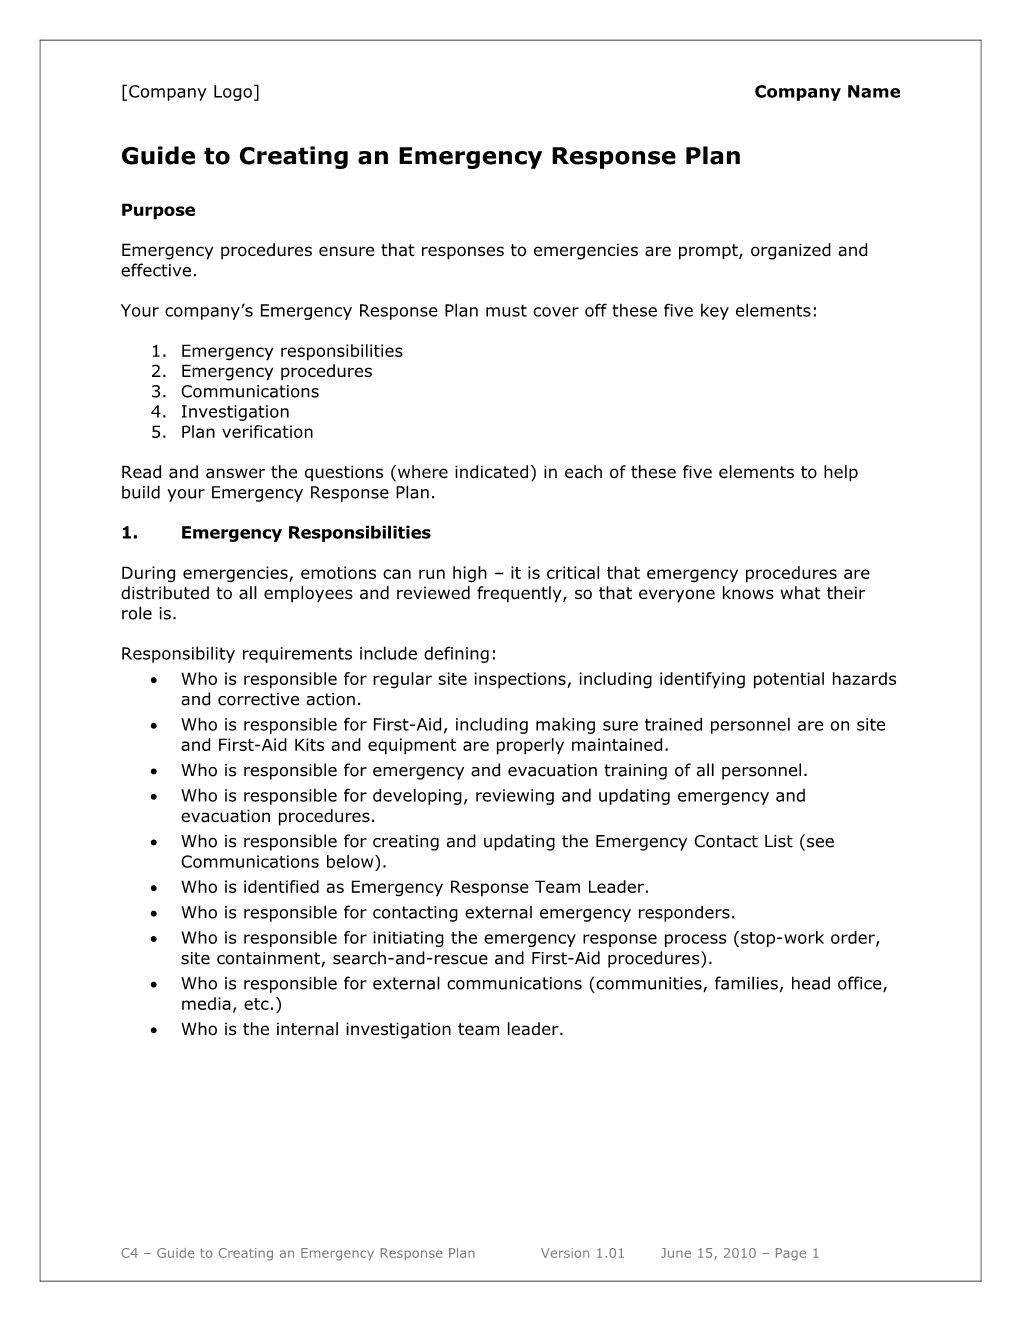 Guide to Creating an Emergency Response Plan